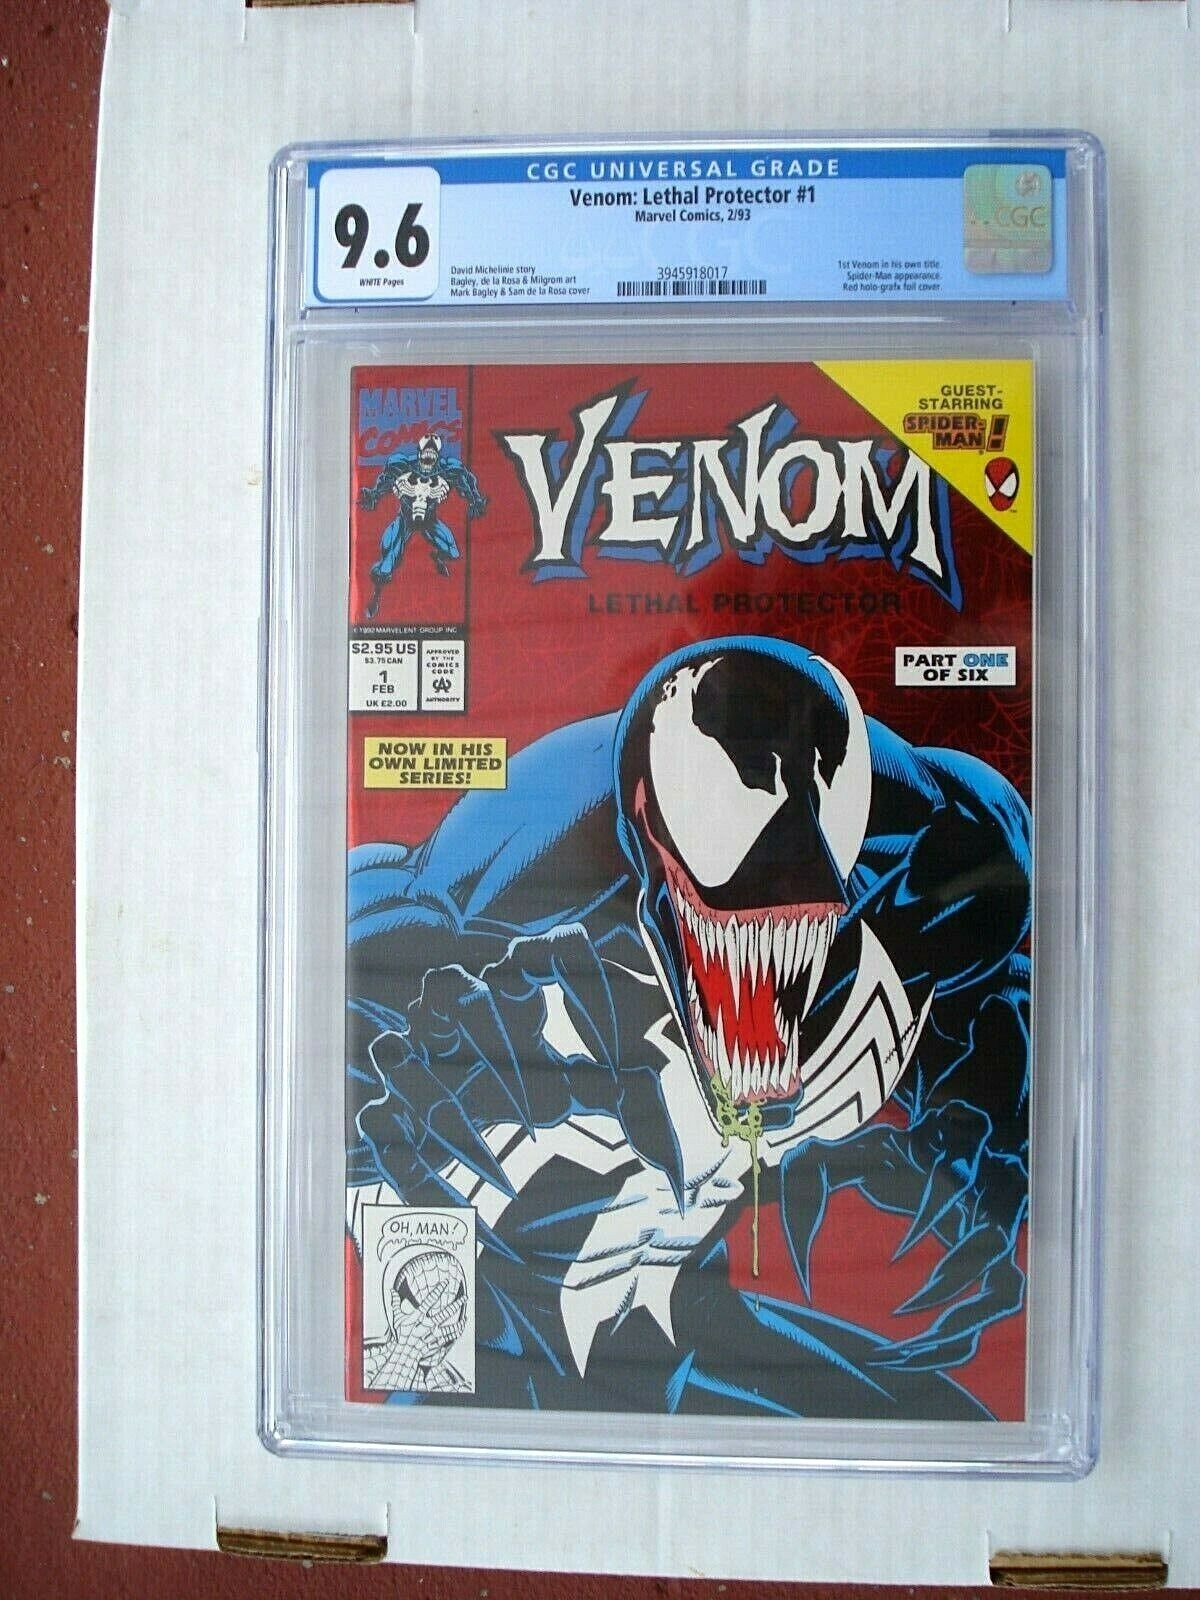 Venom: Lethal Protector # 1 CGC 9.6 NM+ Red holo-grafx foil cover 